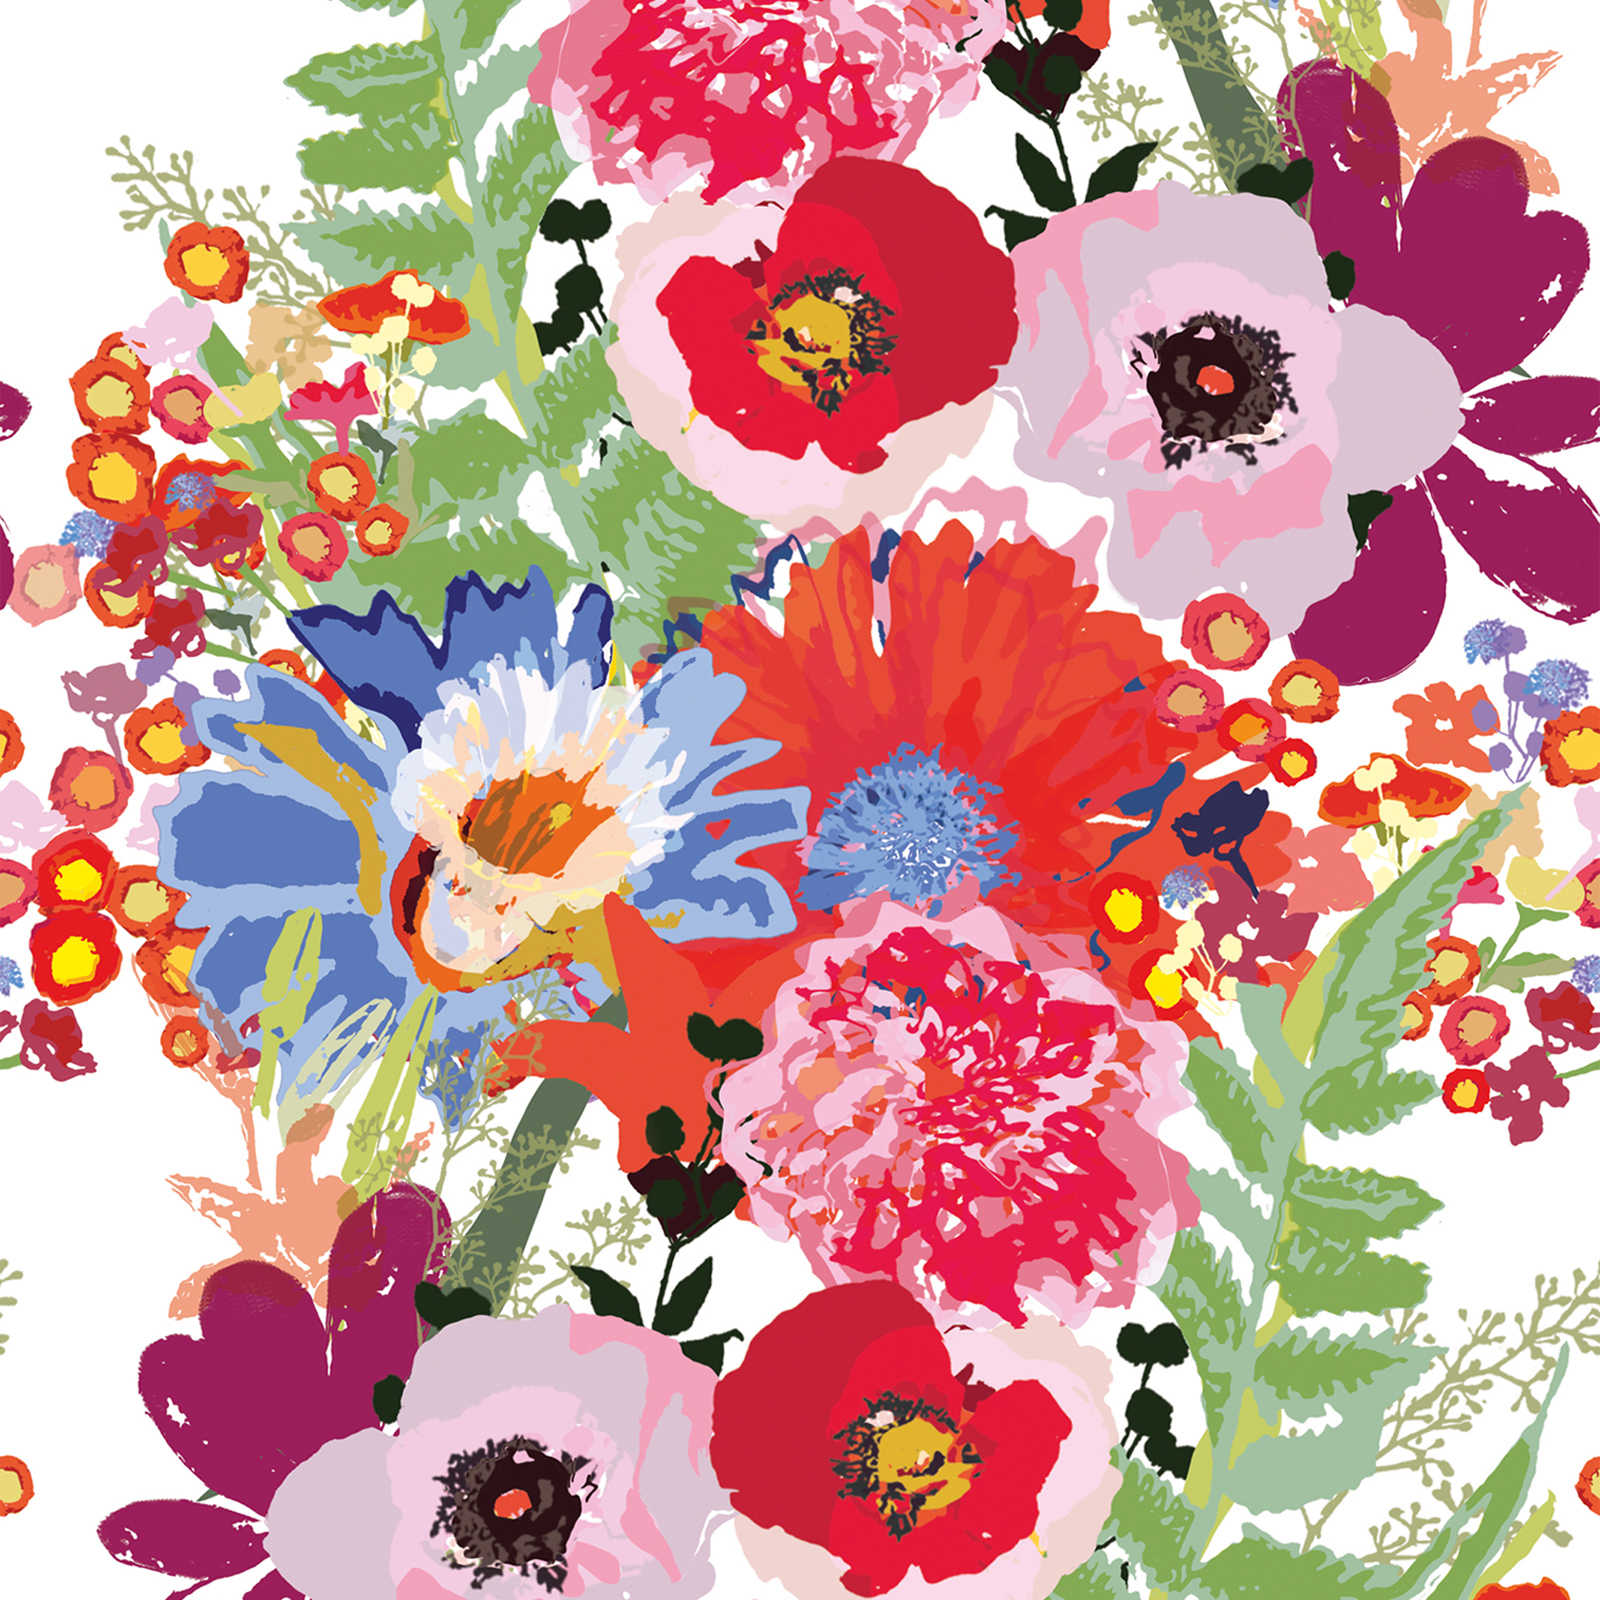 Abstrakte Blumenmotiv Tapete in kräftigen Farben – Bunt, Weiß, Rot
